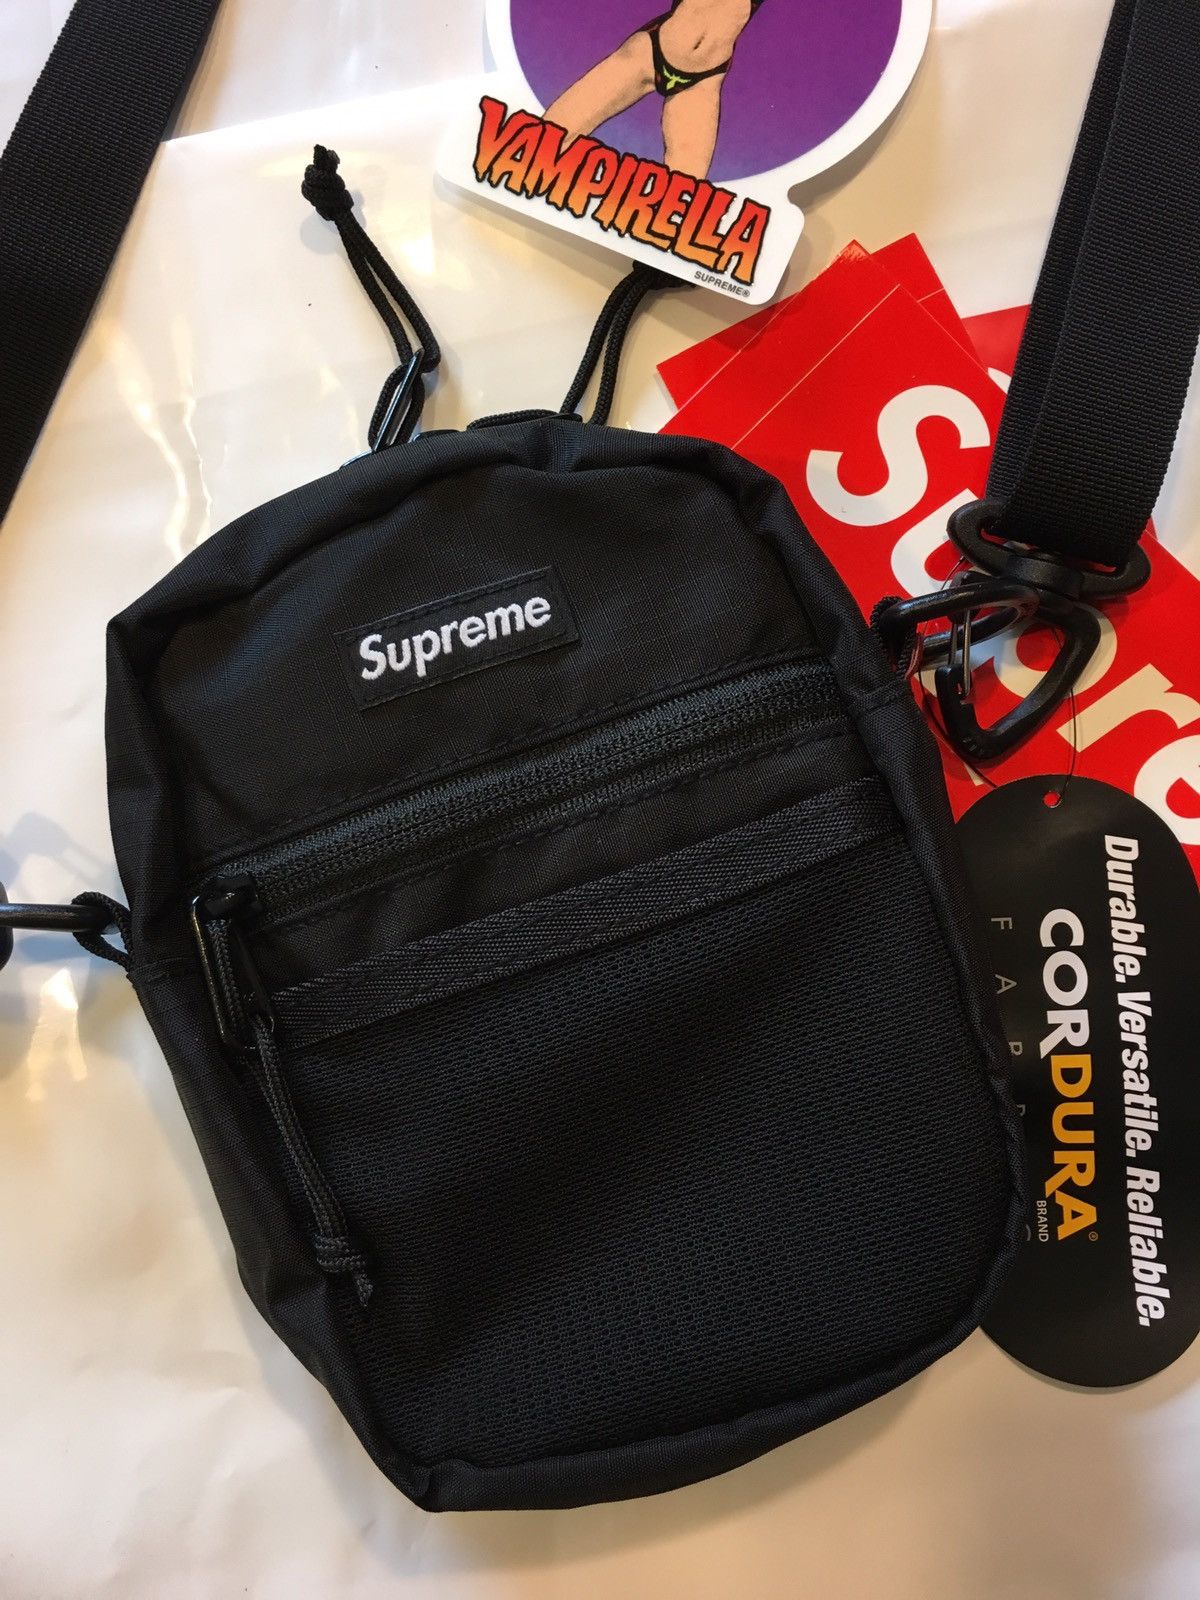 Crossbody bag Supreme Black in Cotton - 29794200